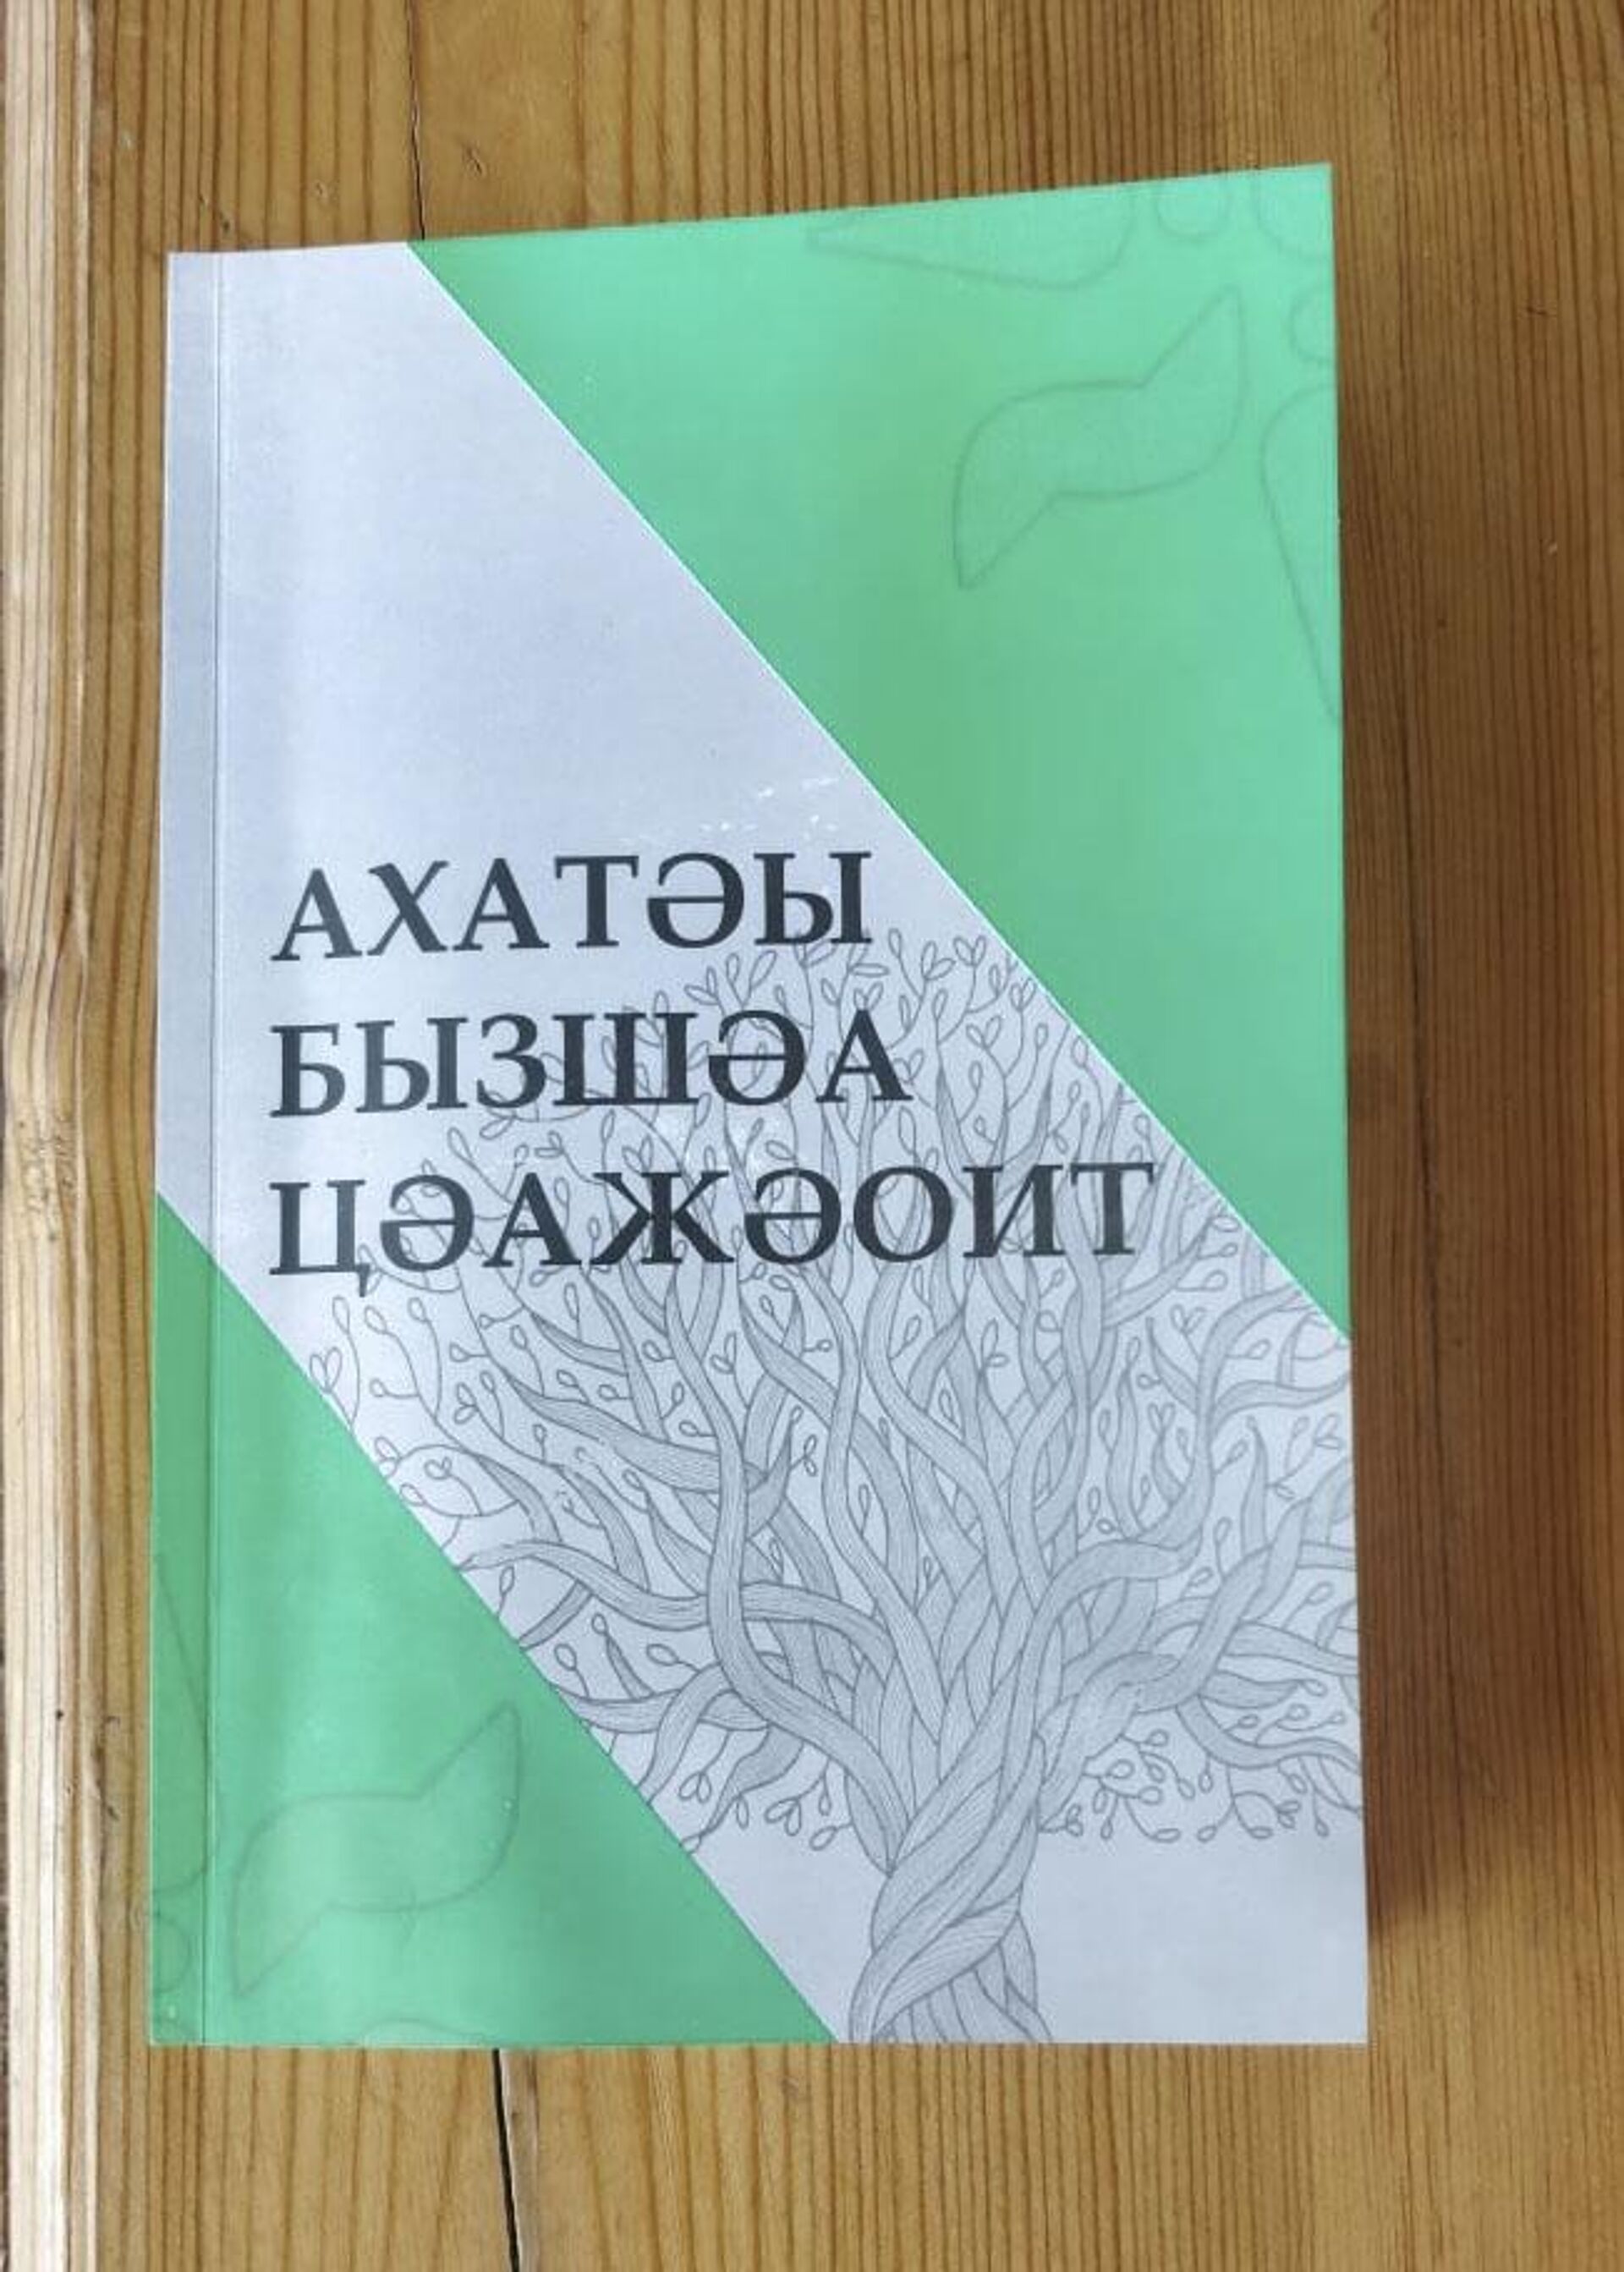 Лагулаа презентации книг - Sputnik Аҧсны, 1920, 26.03.2022